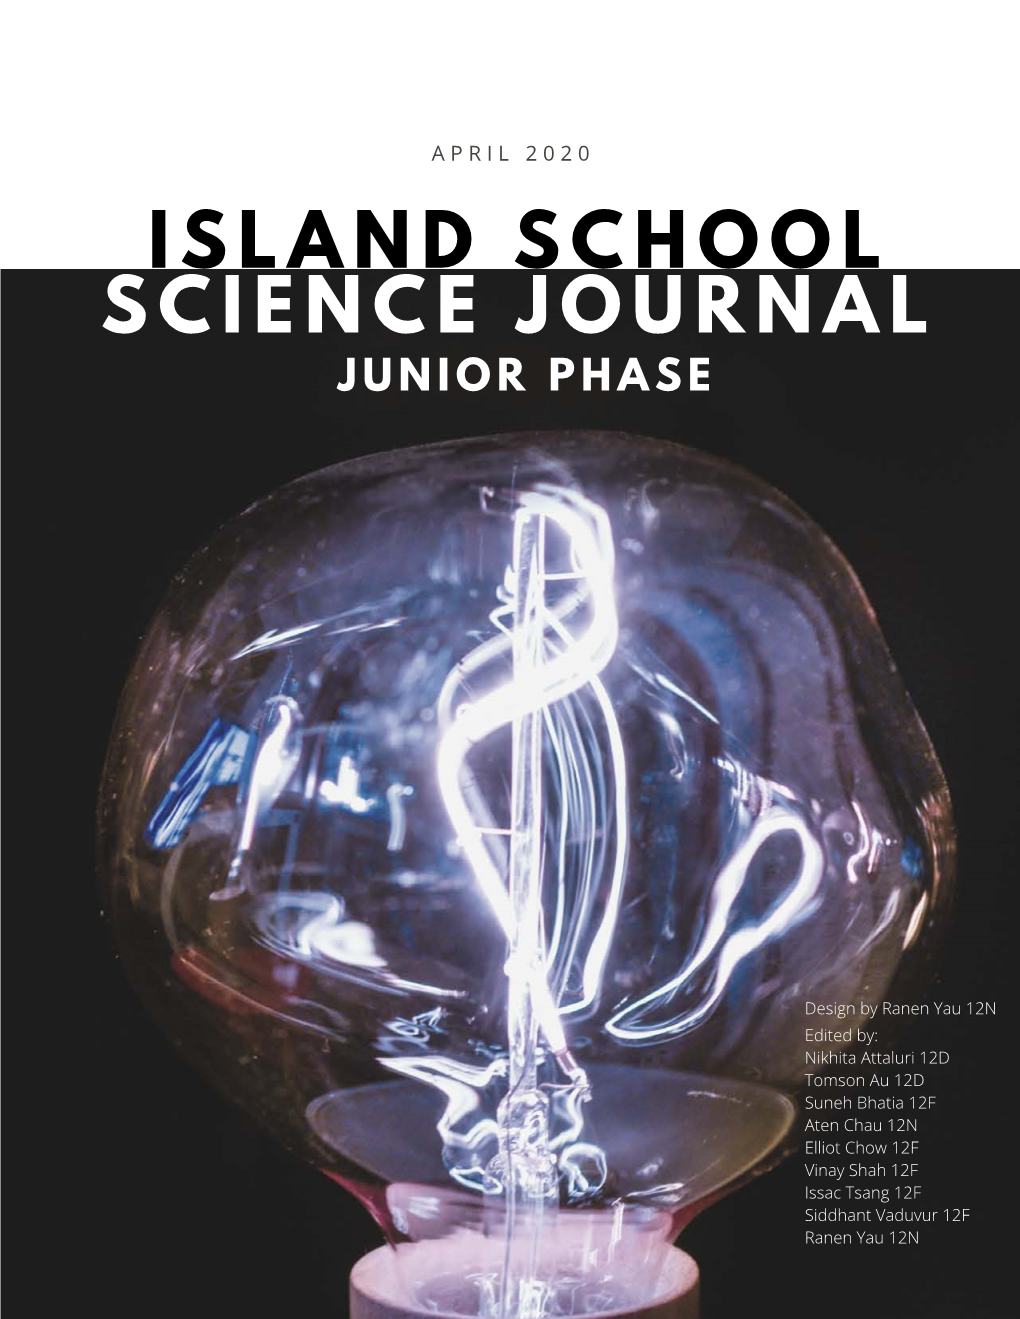 Science Journal (Junior Phase) April 2020